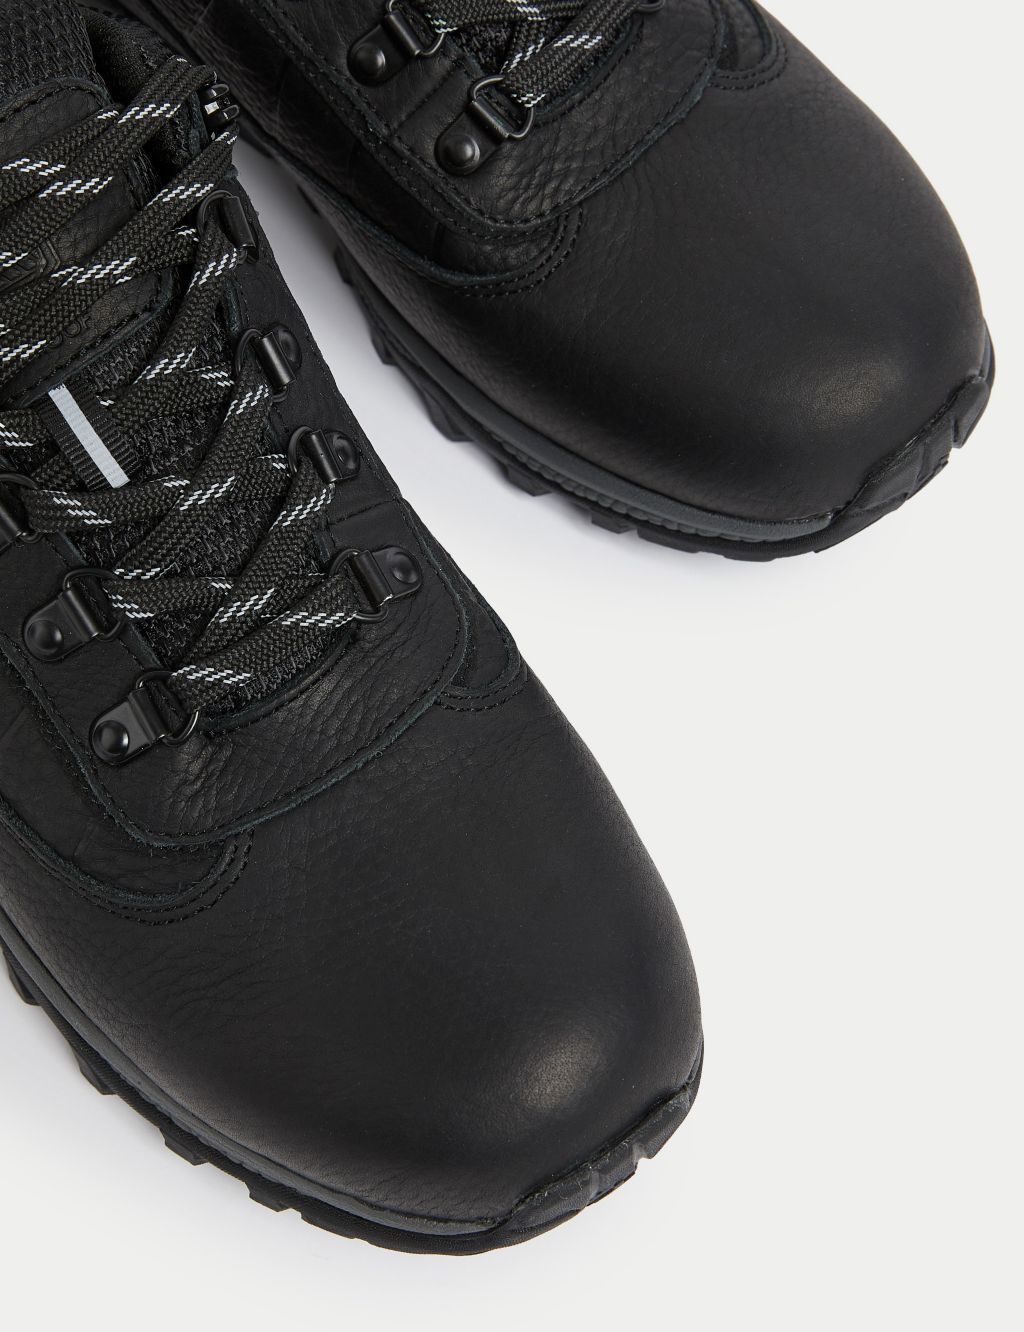 Leather Waterproof Walking Shoes image 3